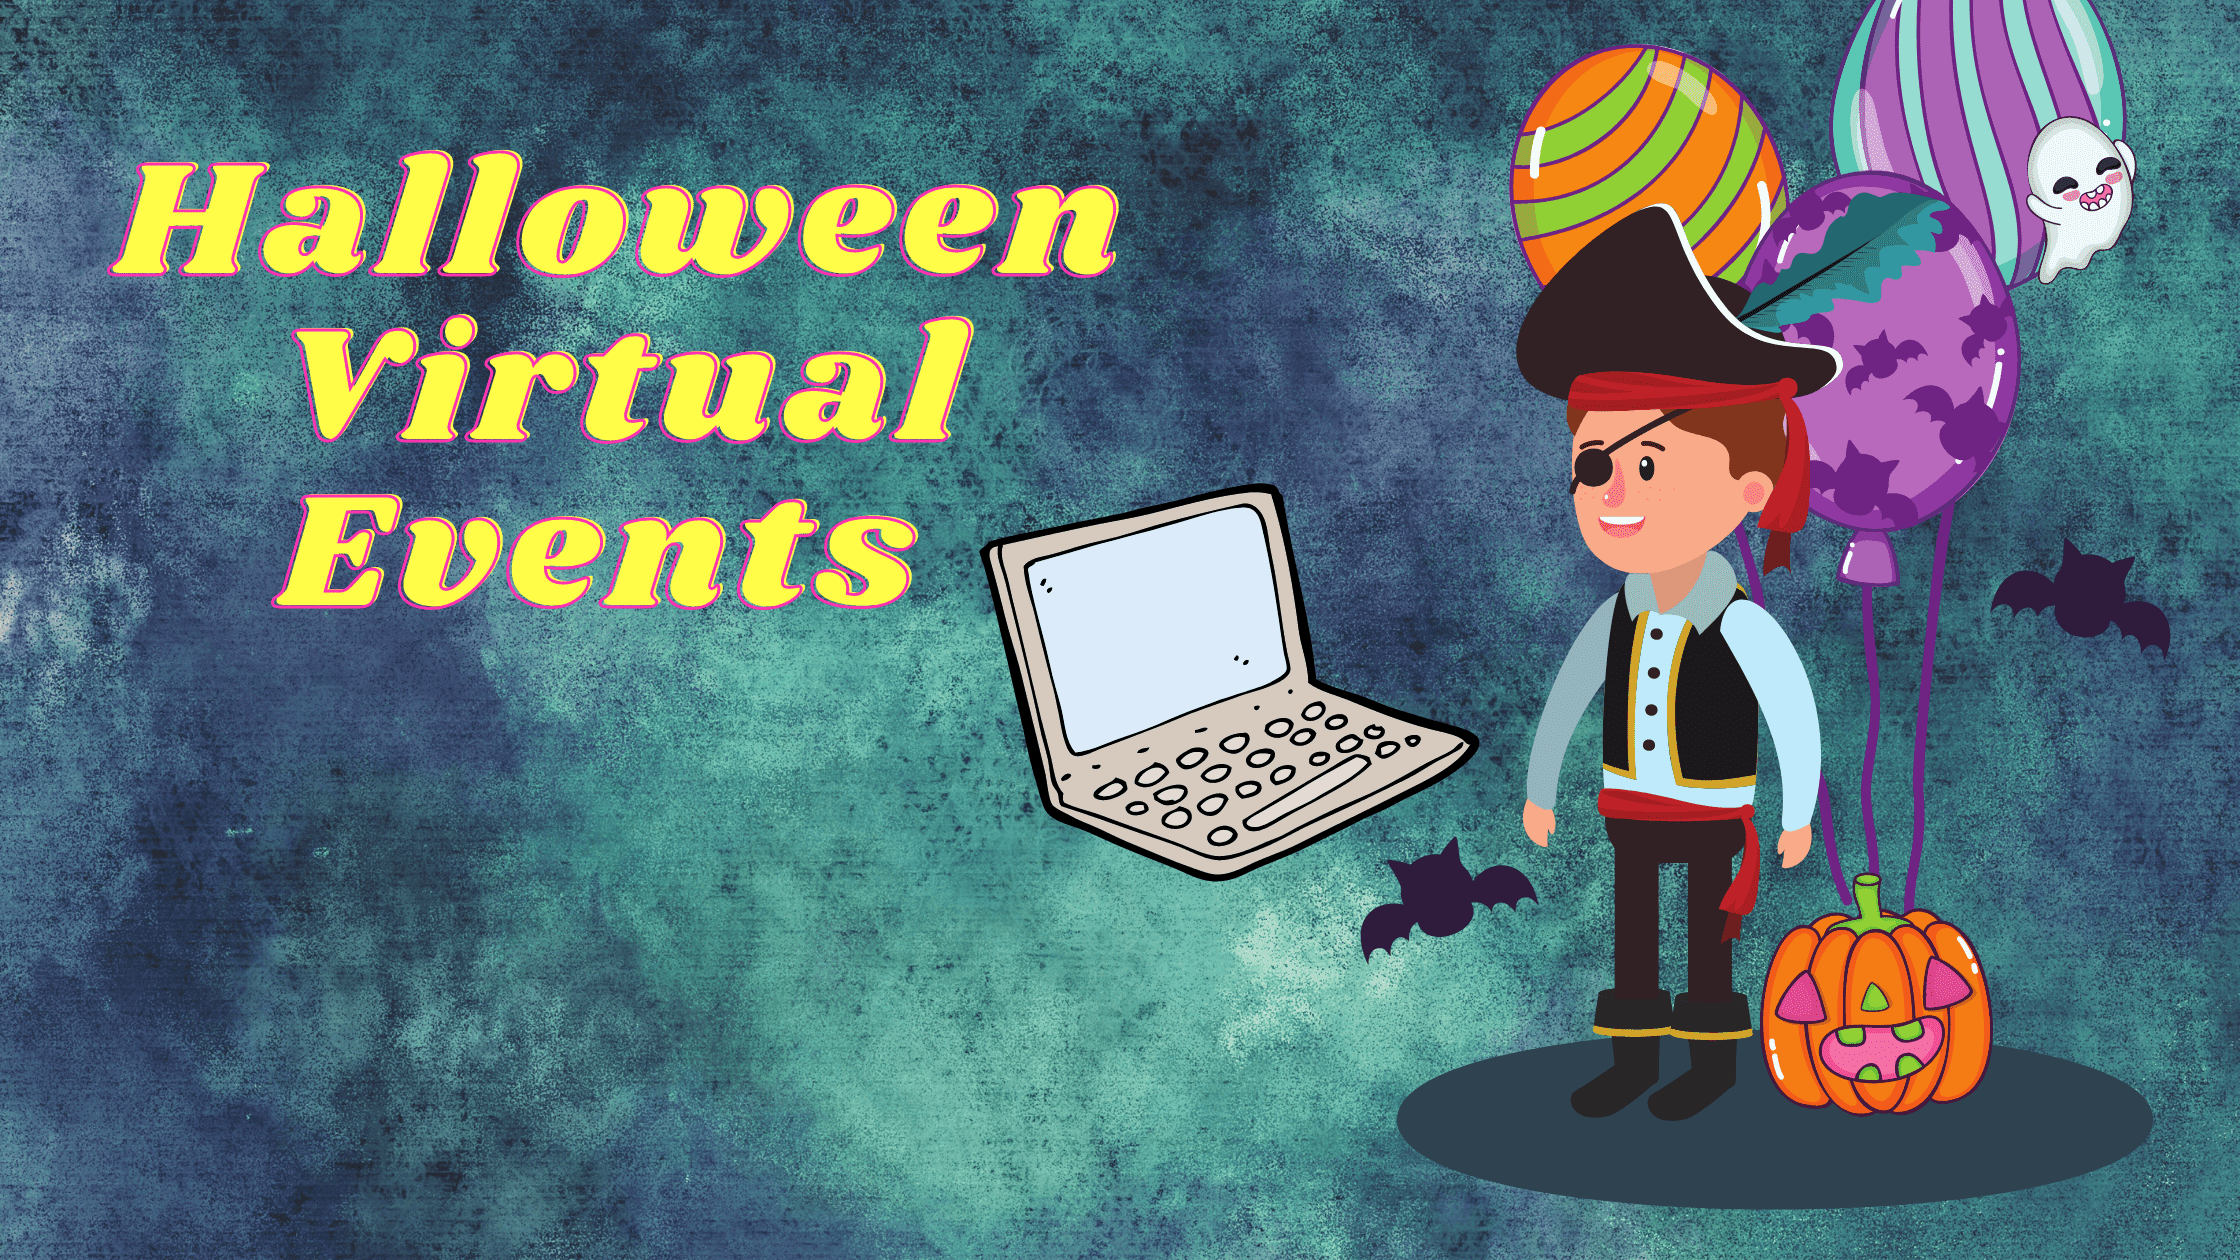 Halloween Virtual Events!